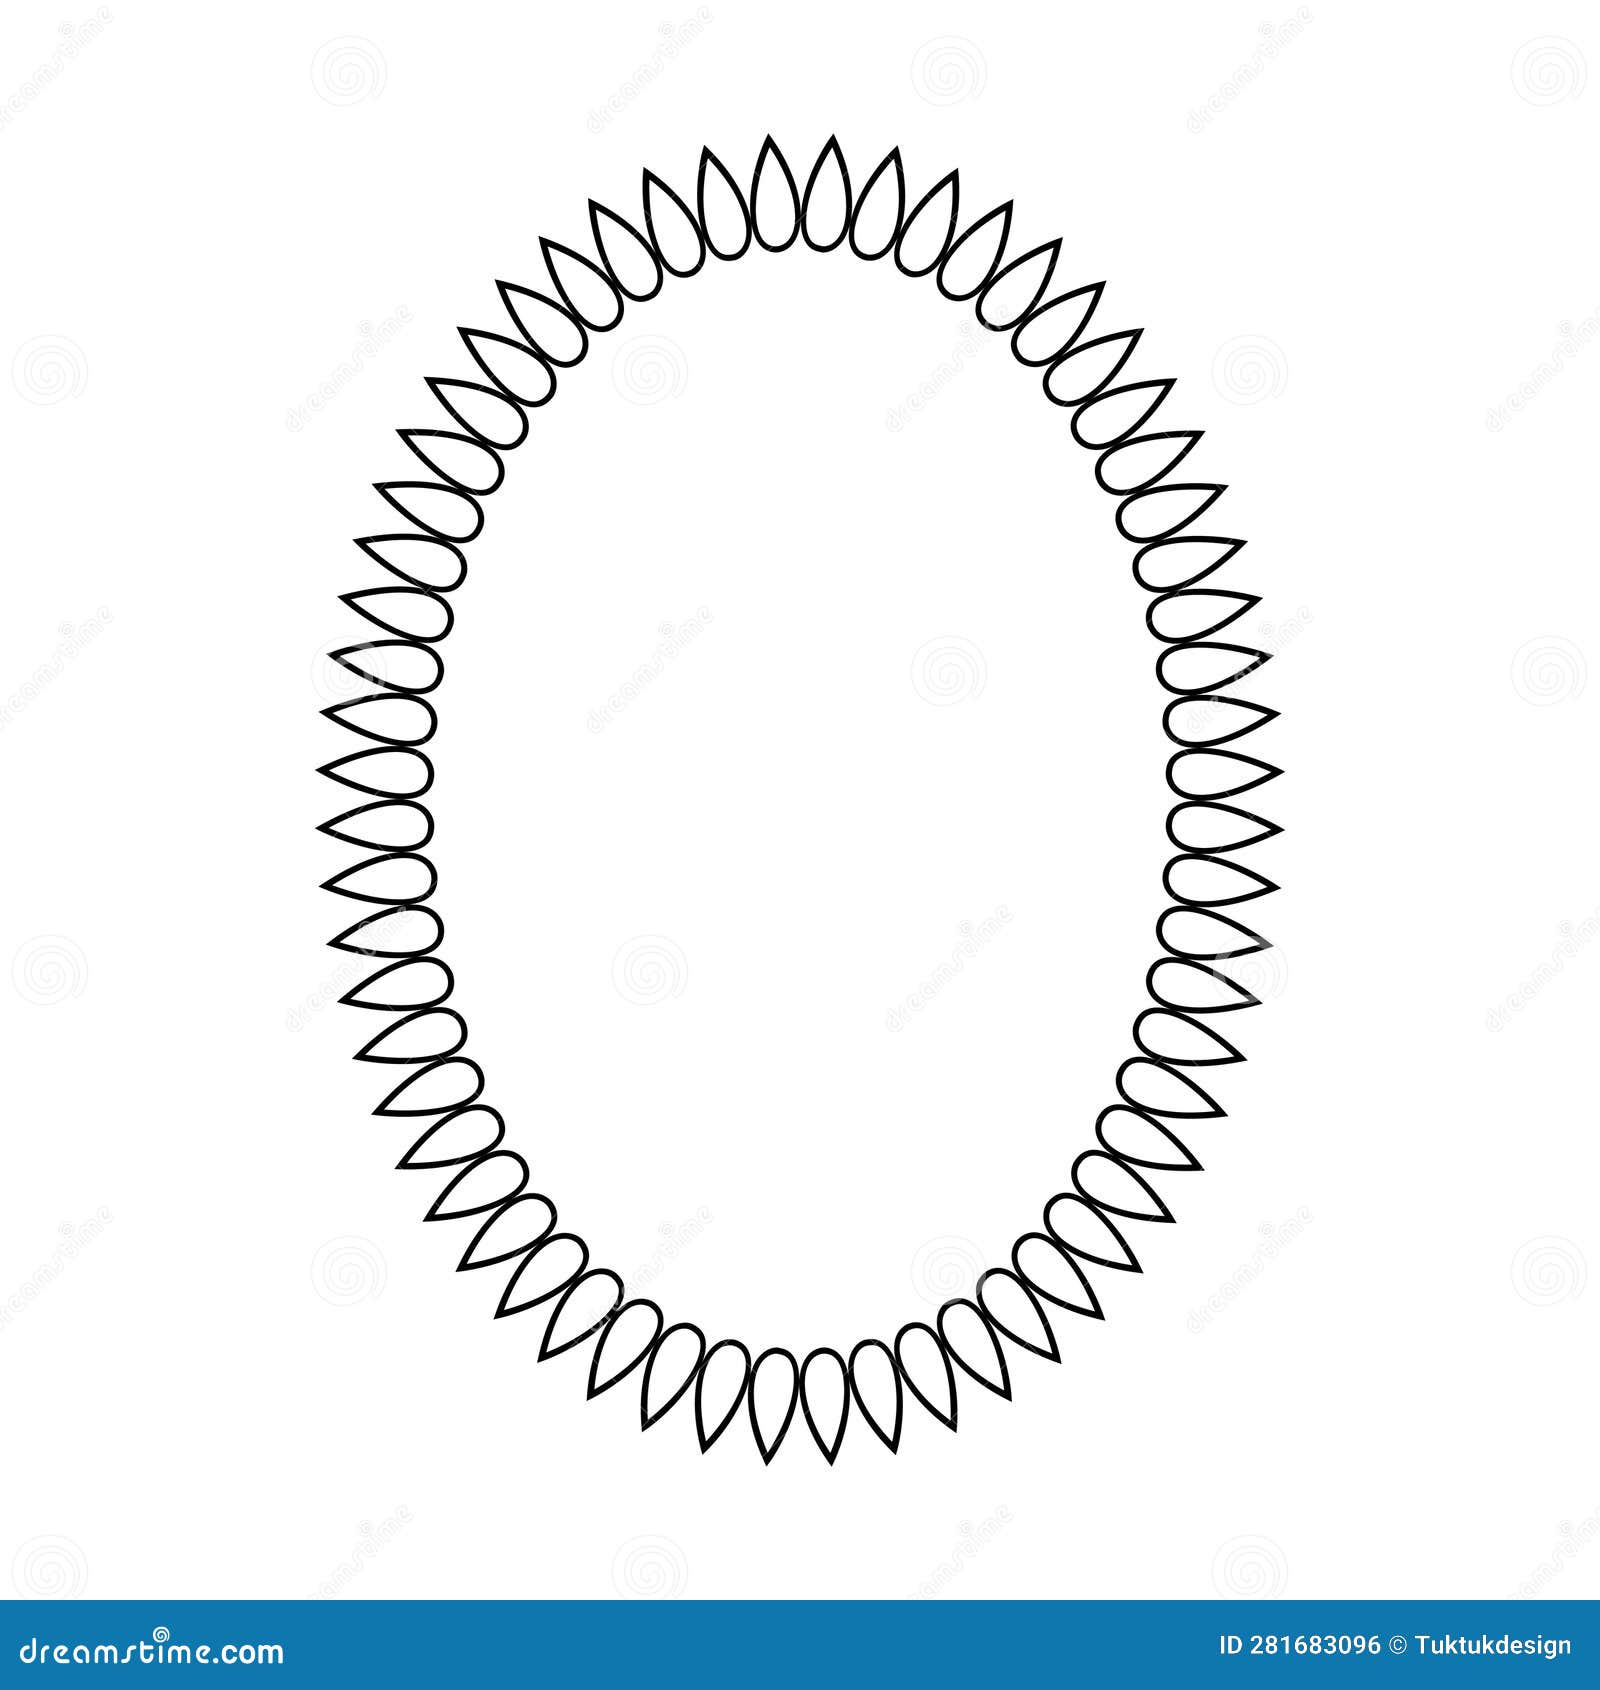 Circle frame round border design shape icon Vector Image